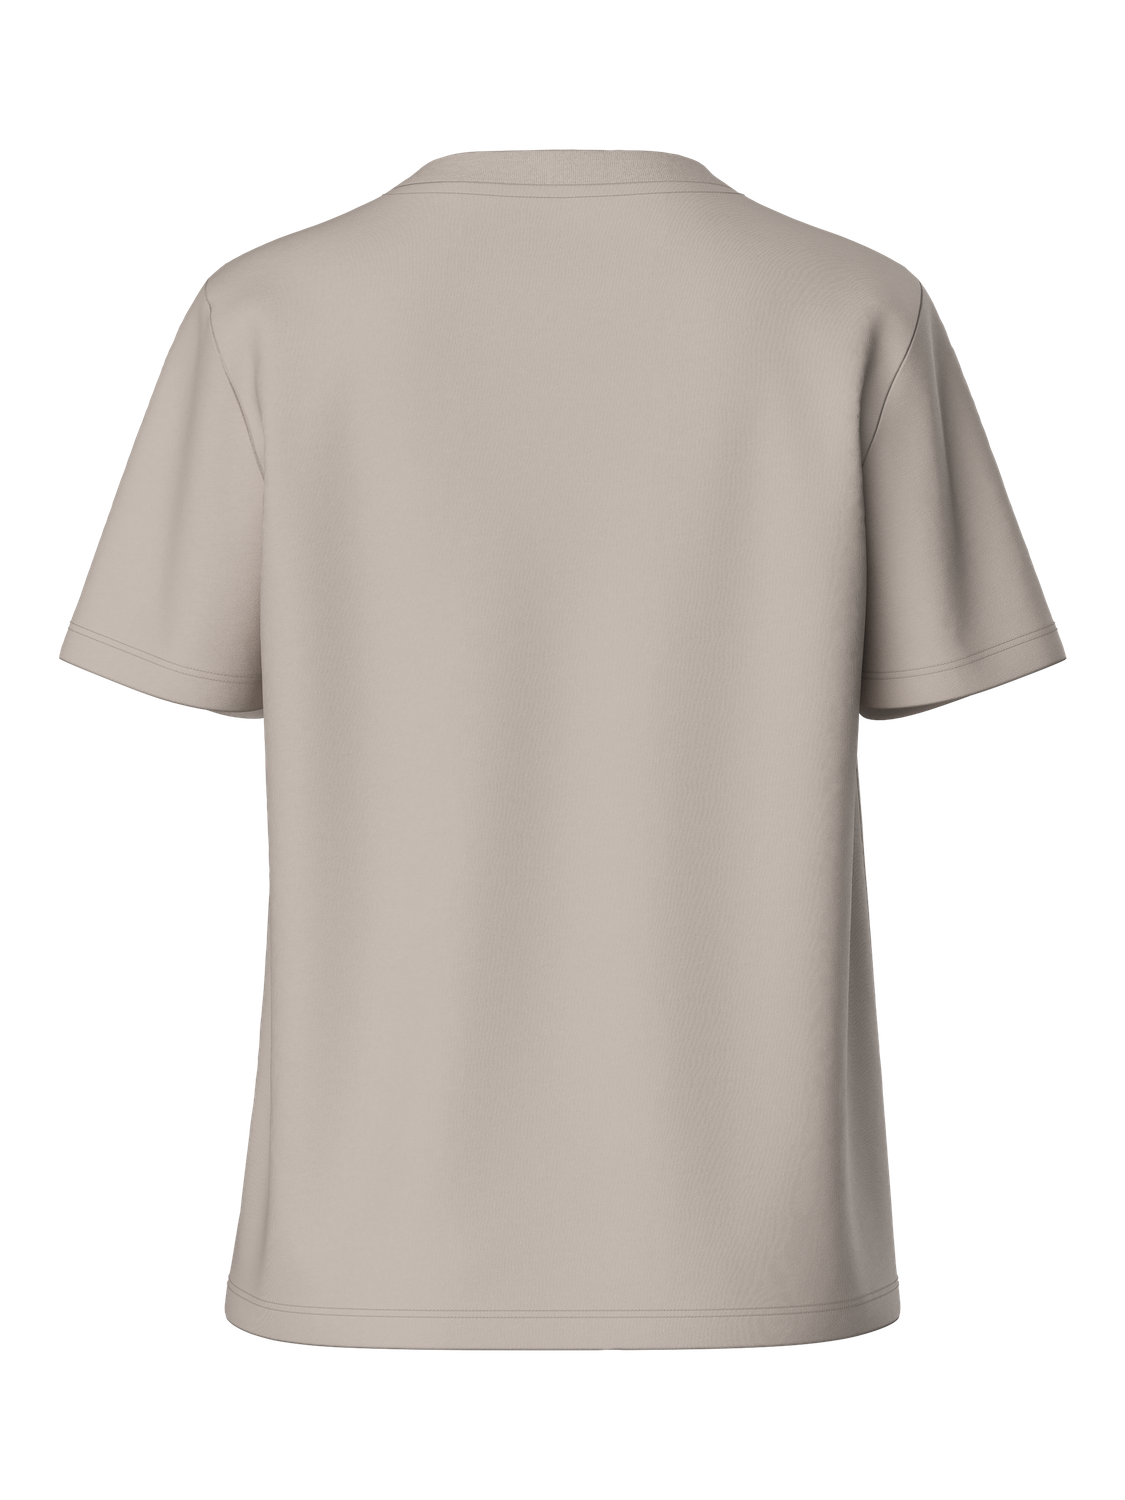 PCRIA T-Shirt - Silver Gray